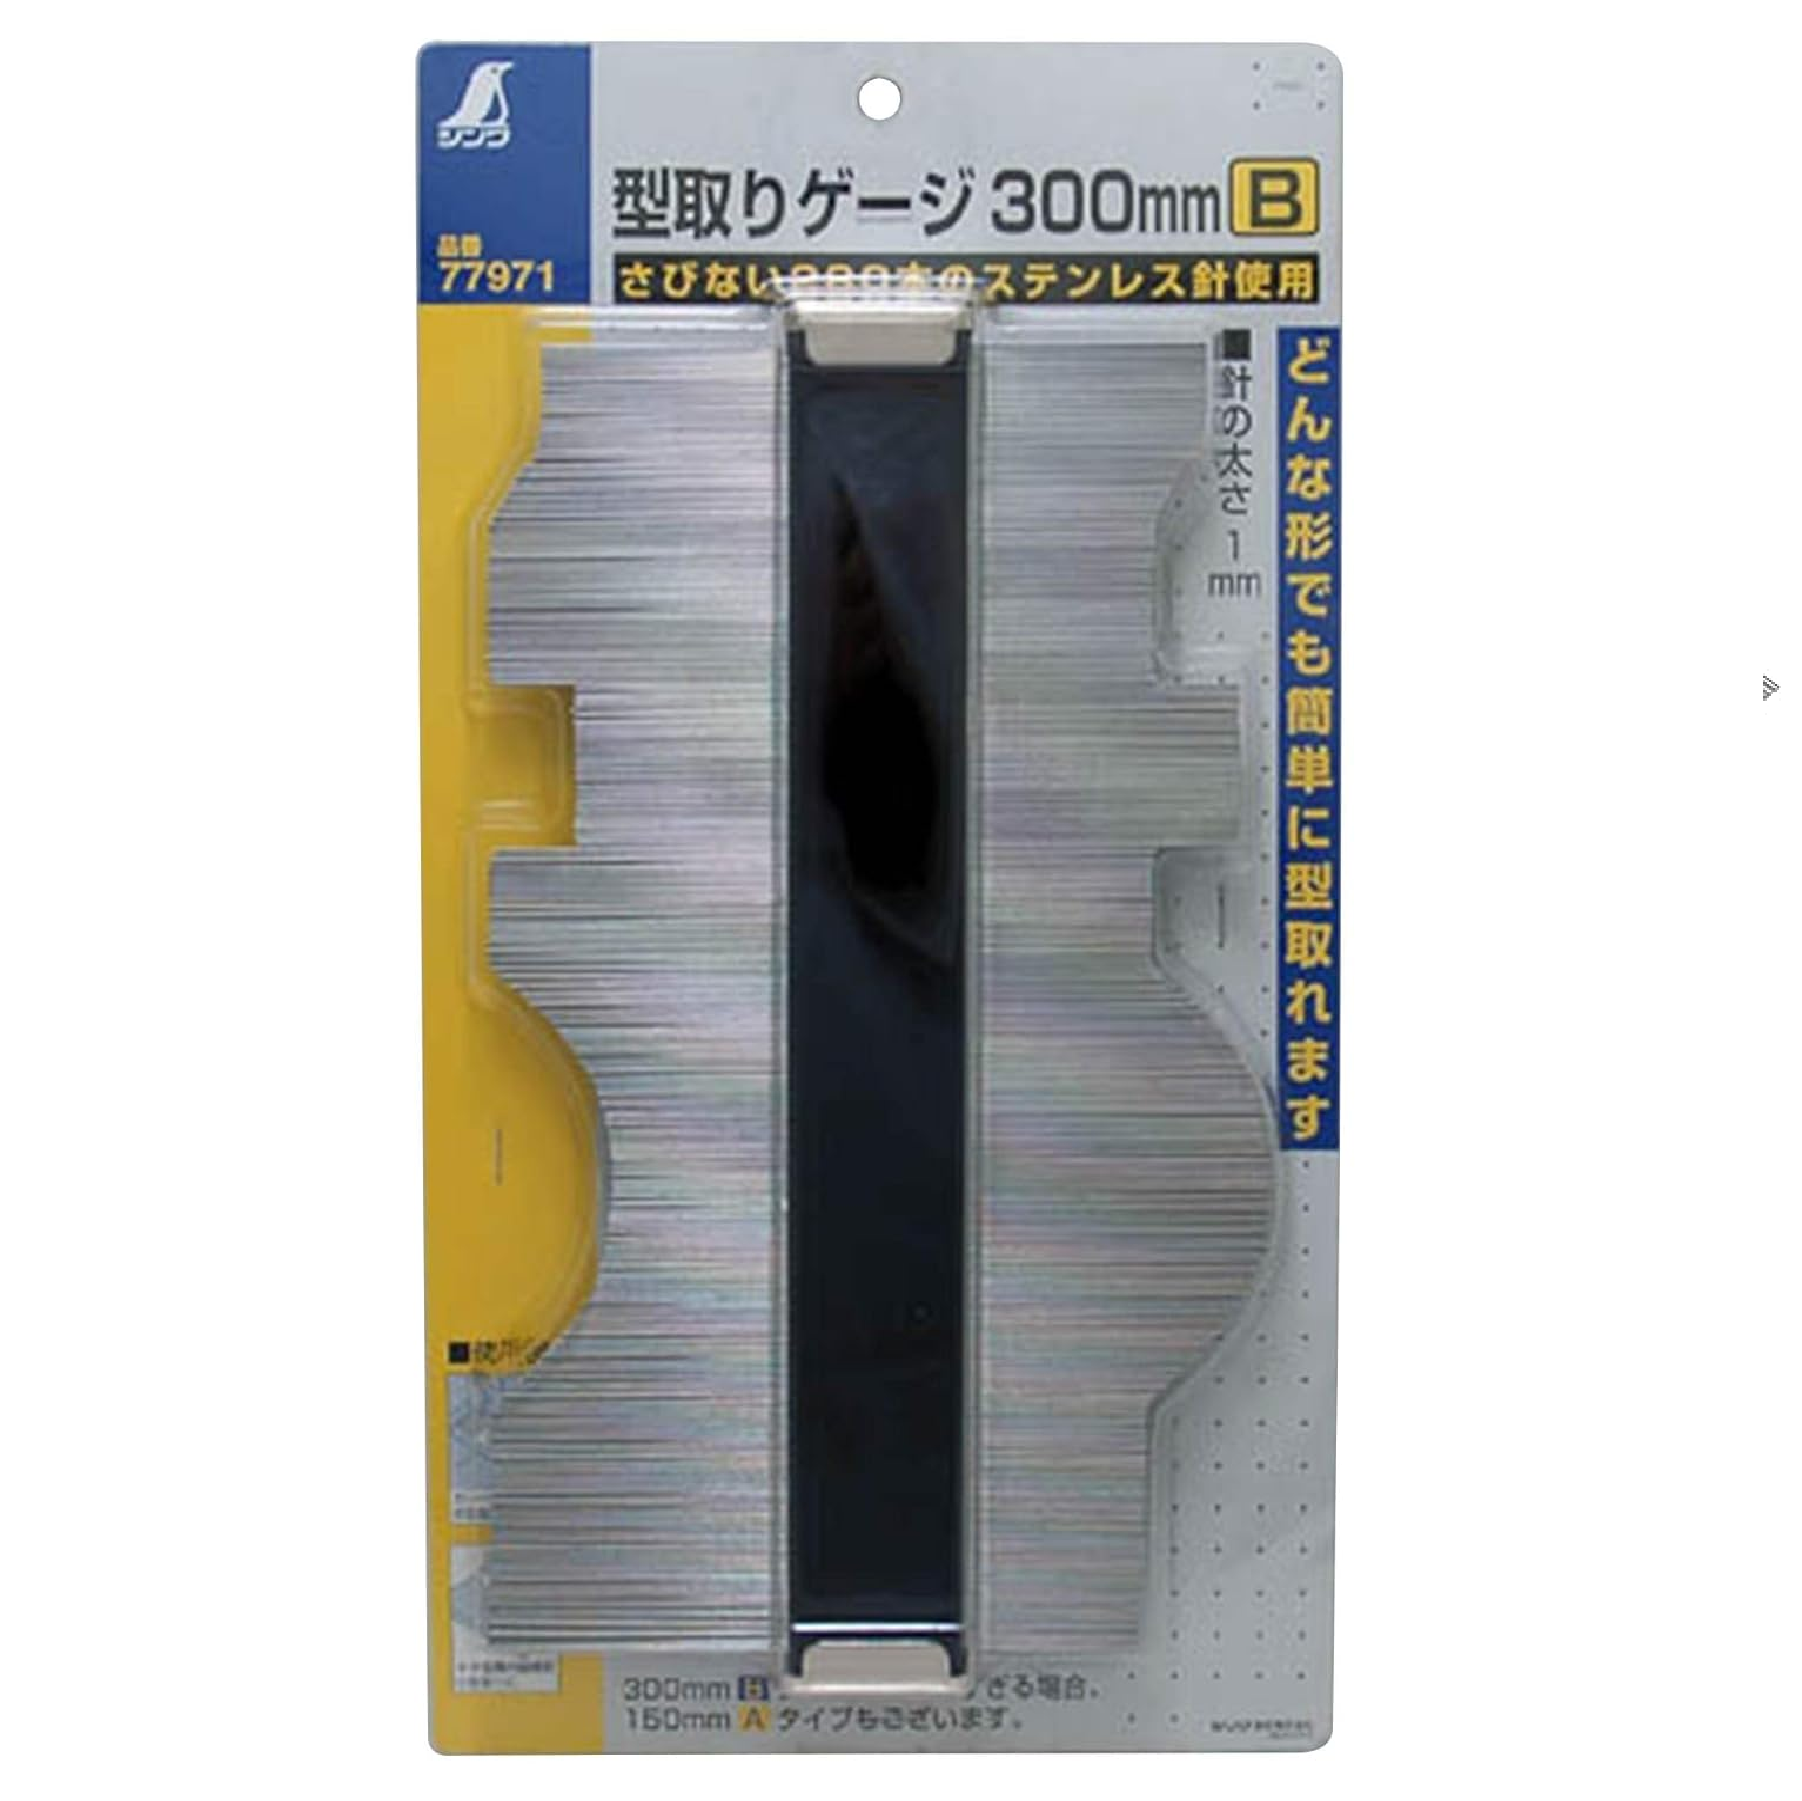 SHINWA 77971 Measurement Moulage Gauge Ruler Contour 300MM